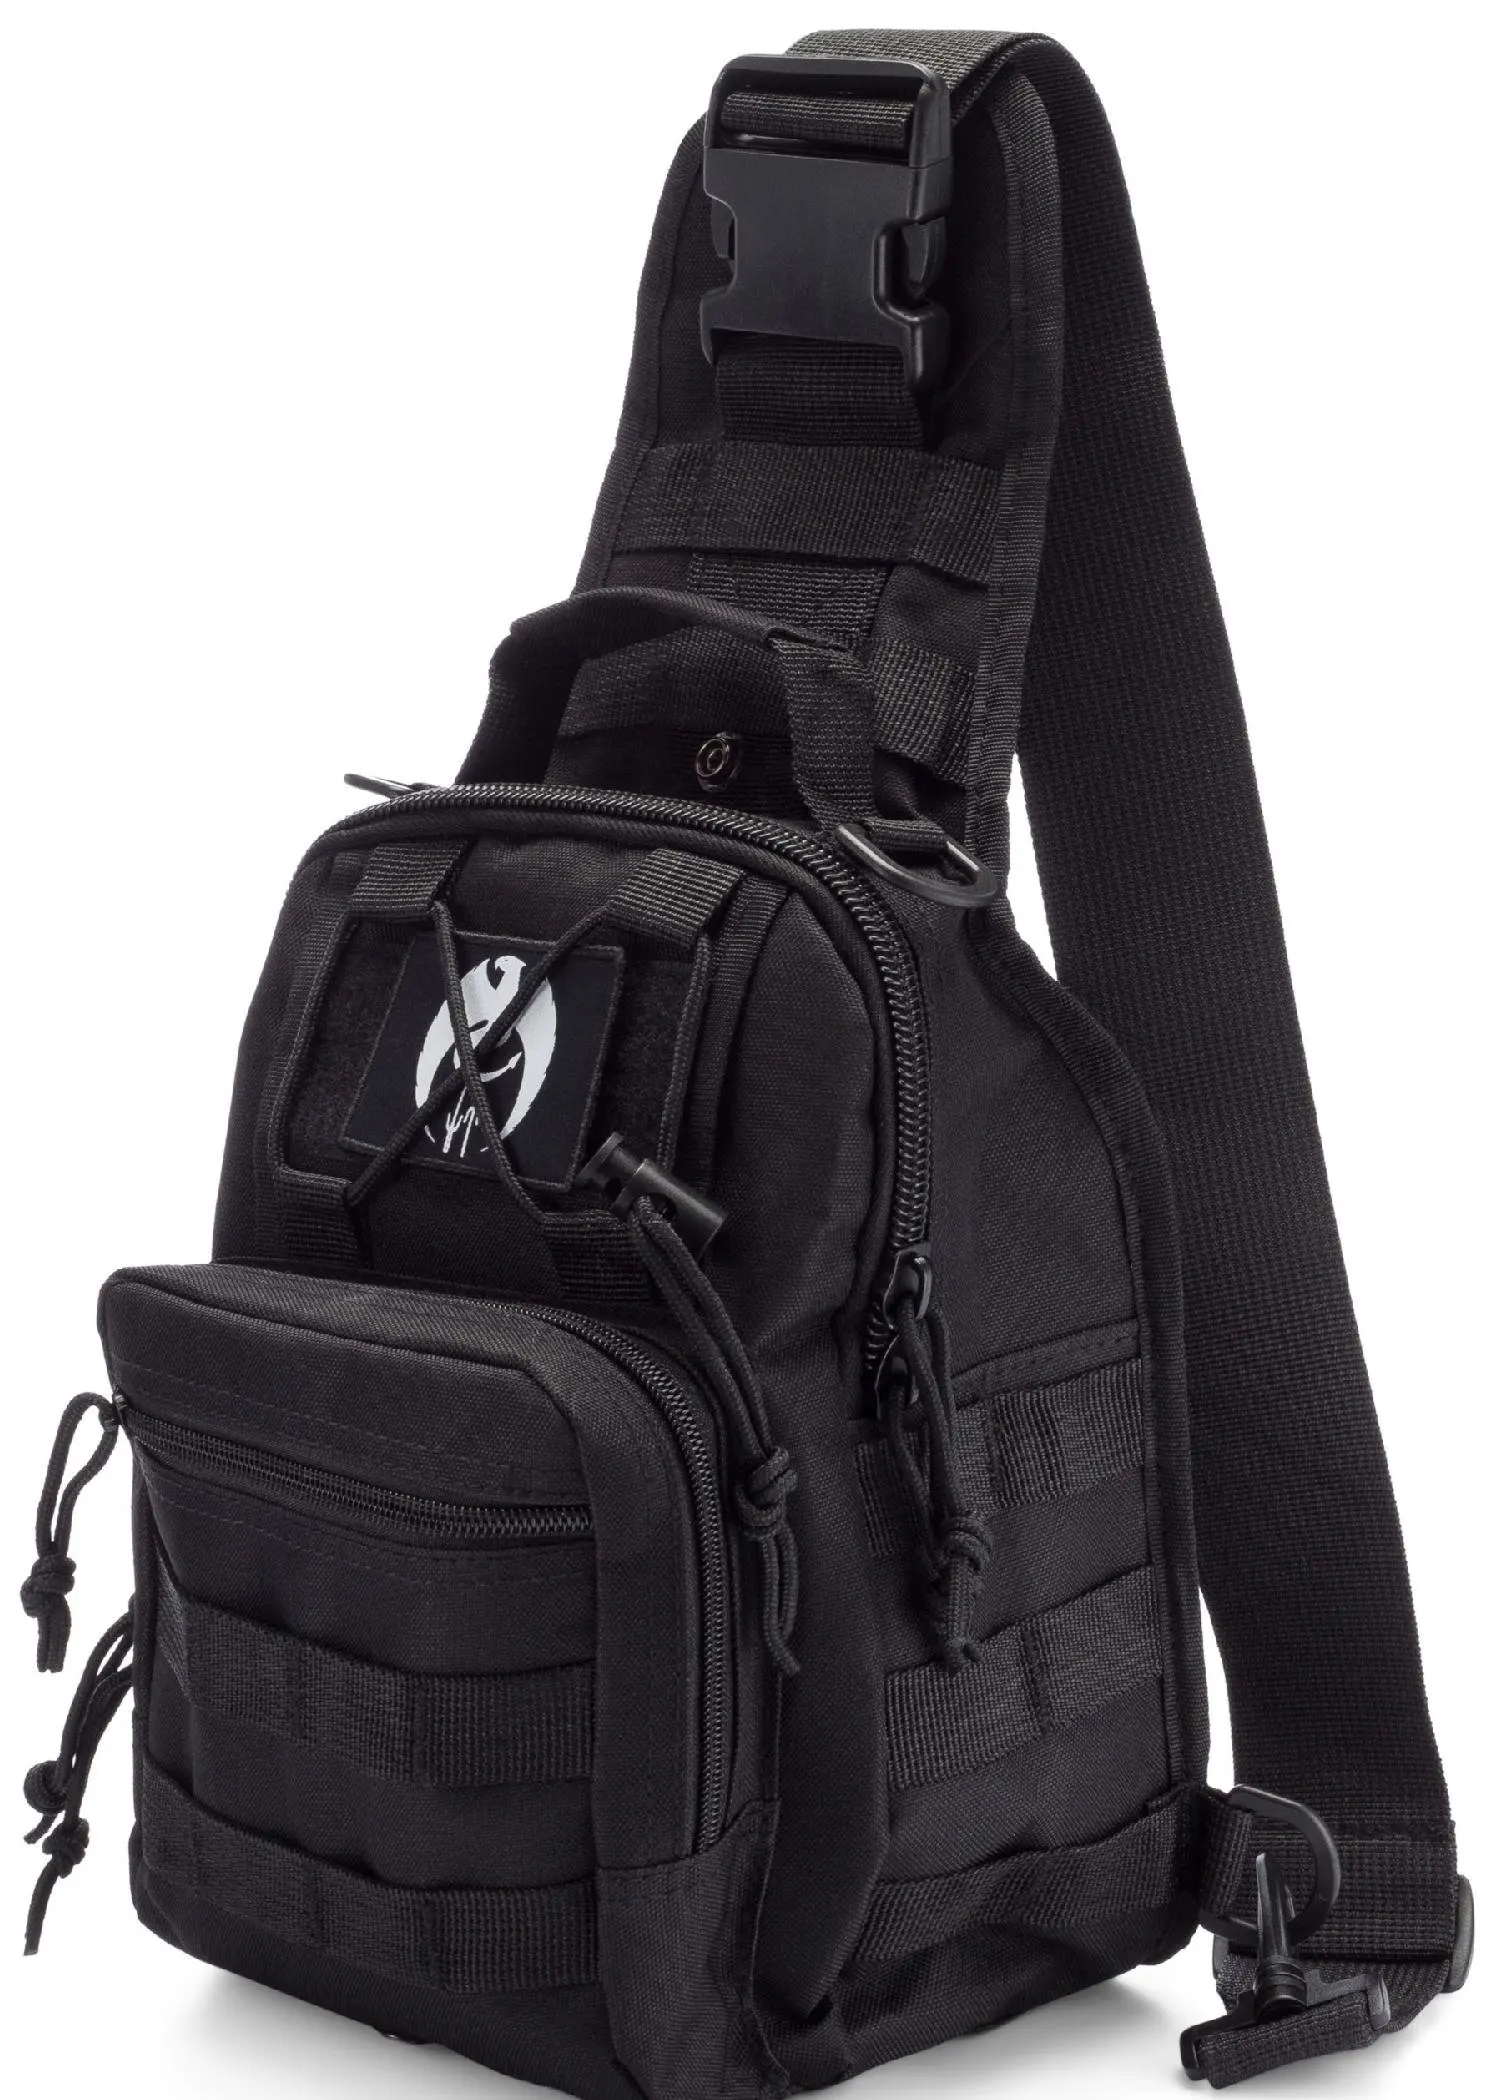 Buy DRAGON NINJA Tactical Sling Bag for Men and Women Premium Tactical Backpack Military Sport ...